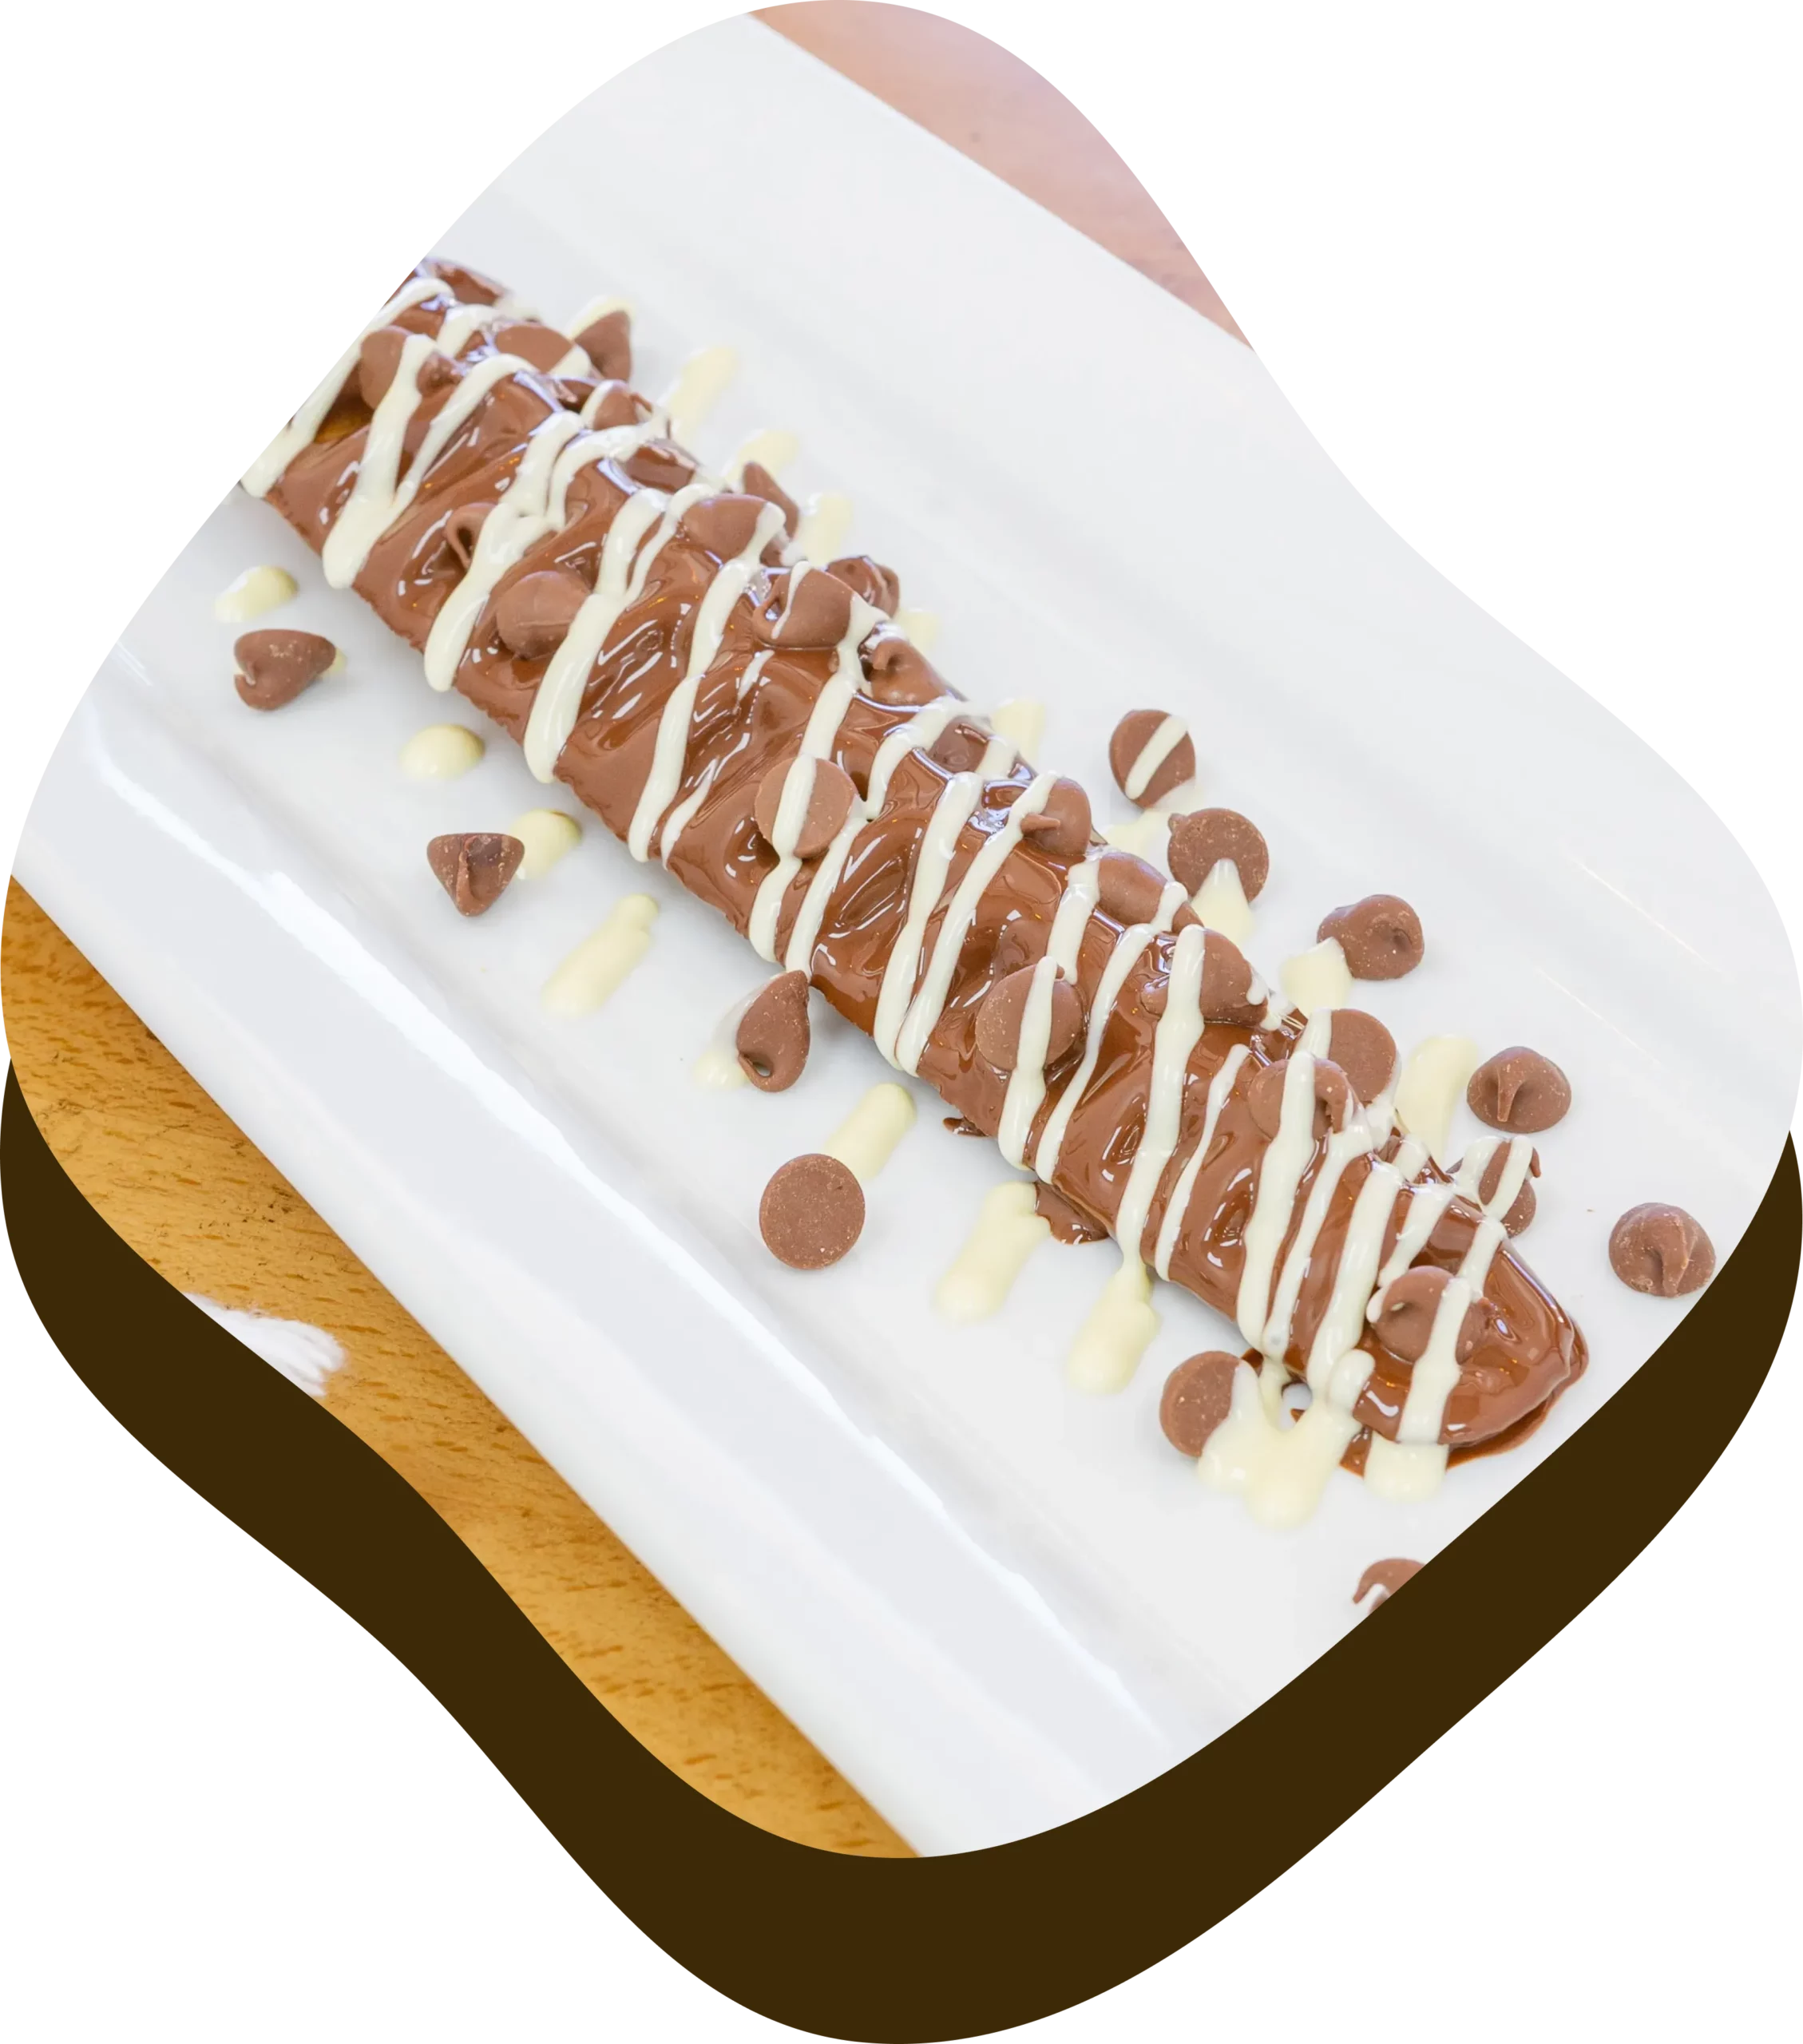 Chocolate covered waffle